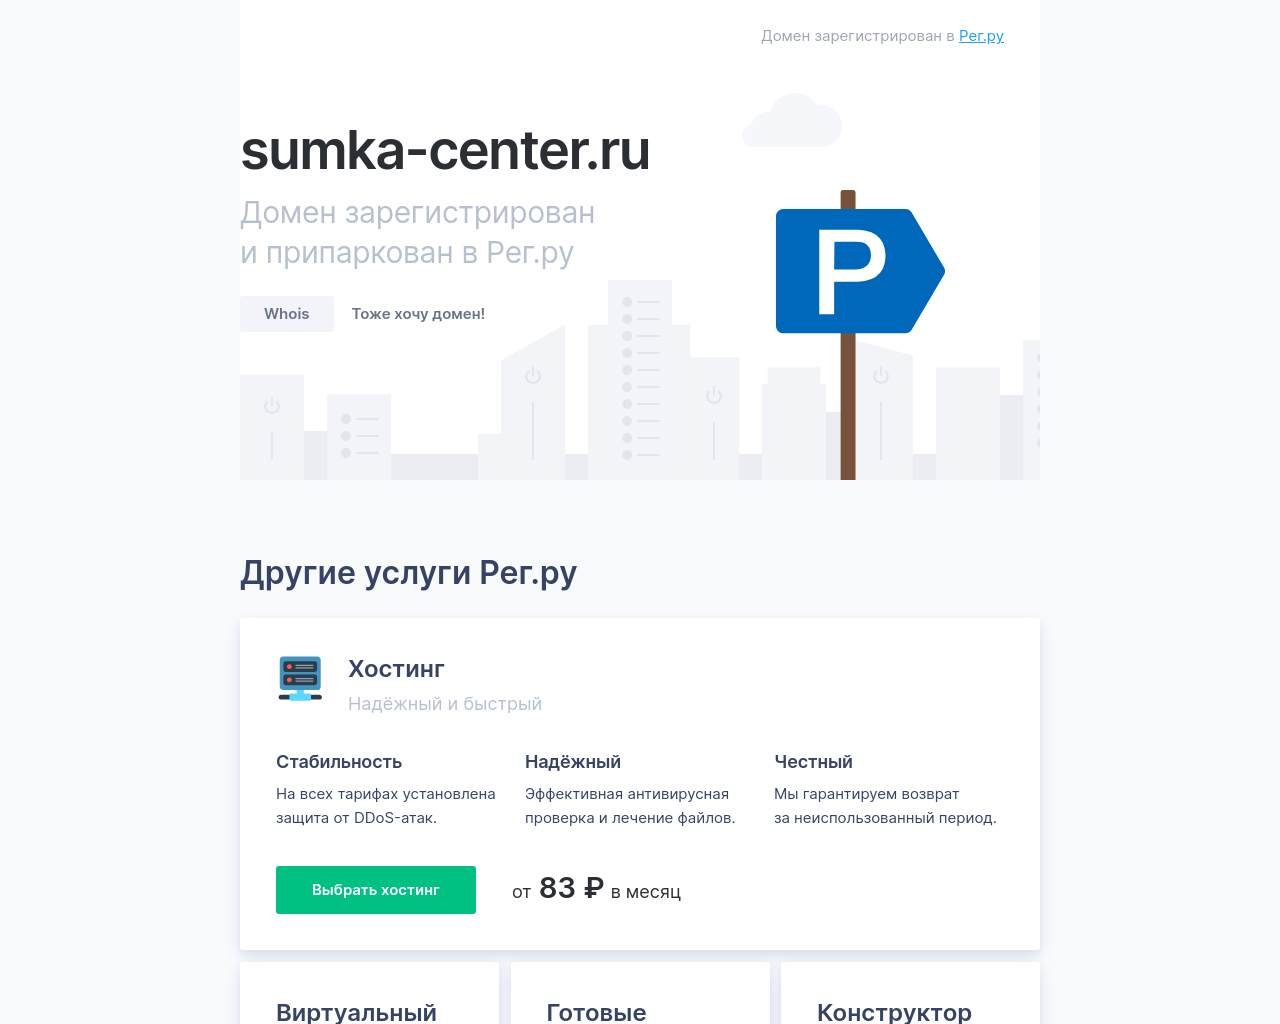 sumka-center.ru